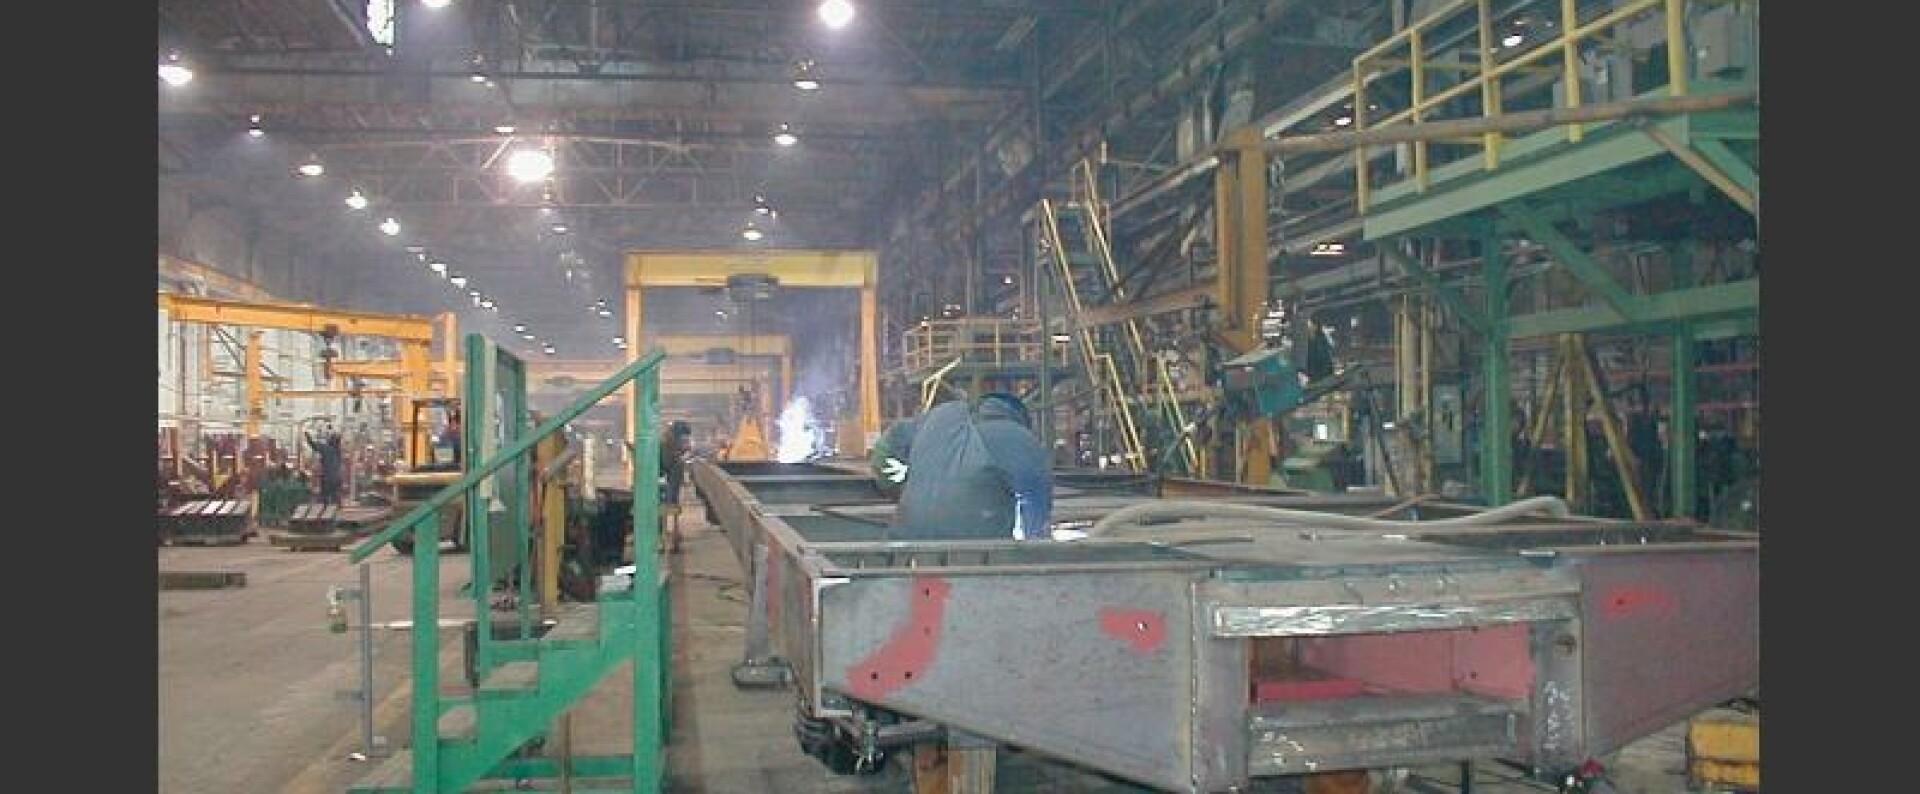 14 Trenton steel works Pictou Co. gone